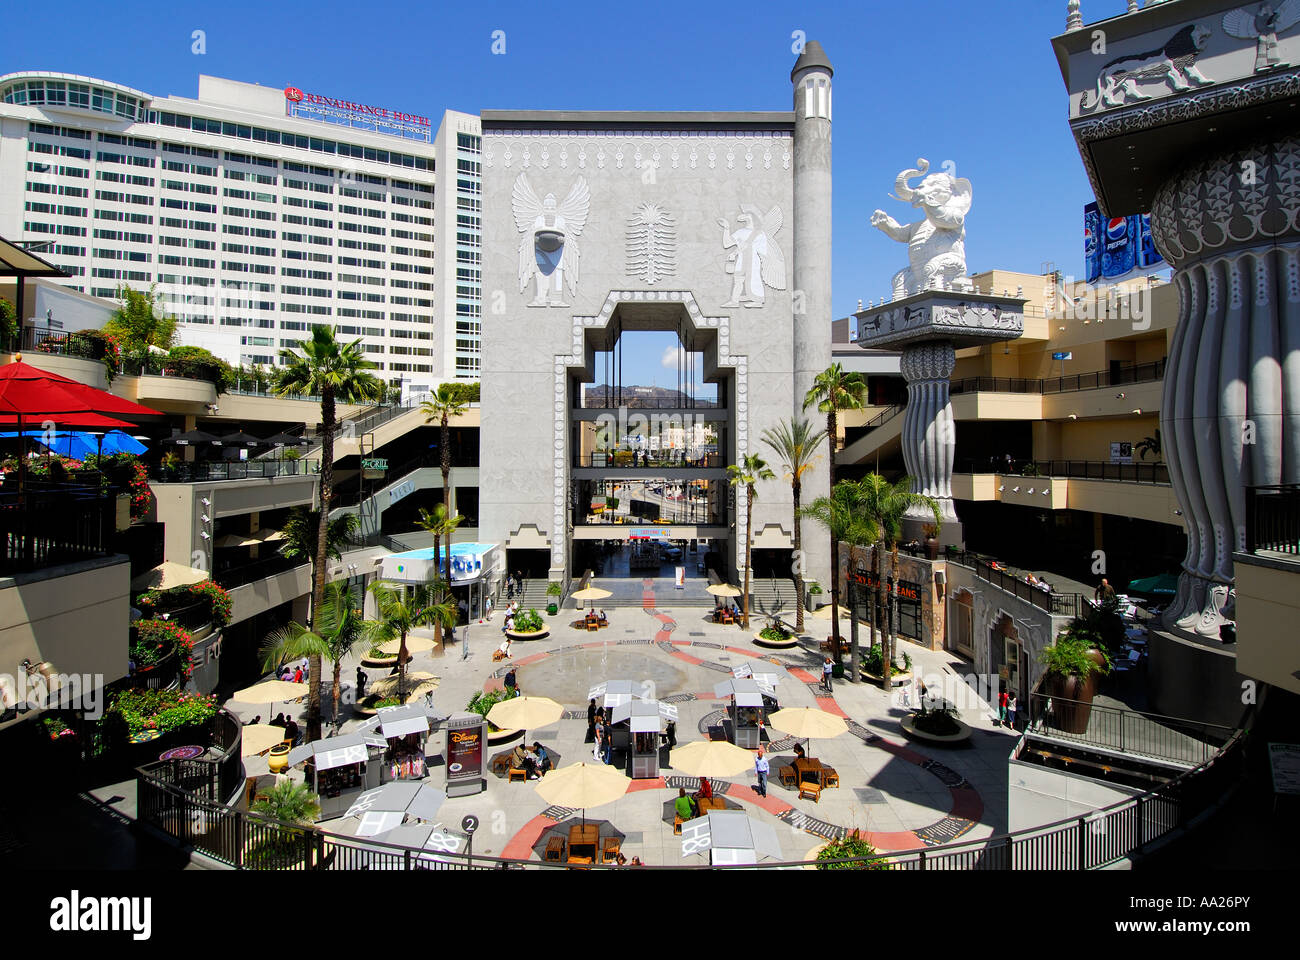 Babylon Courtyard Hollywood & Highland Centre Stock Photo